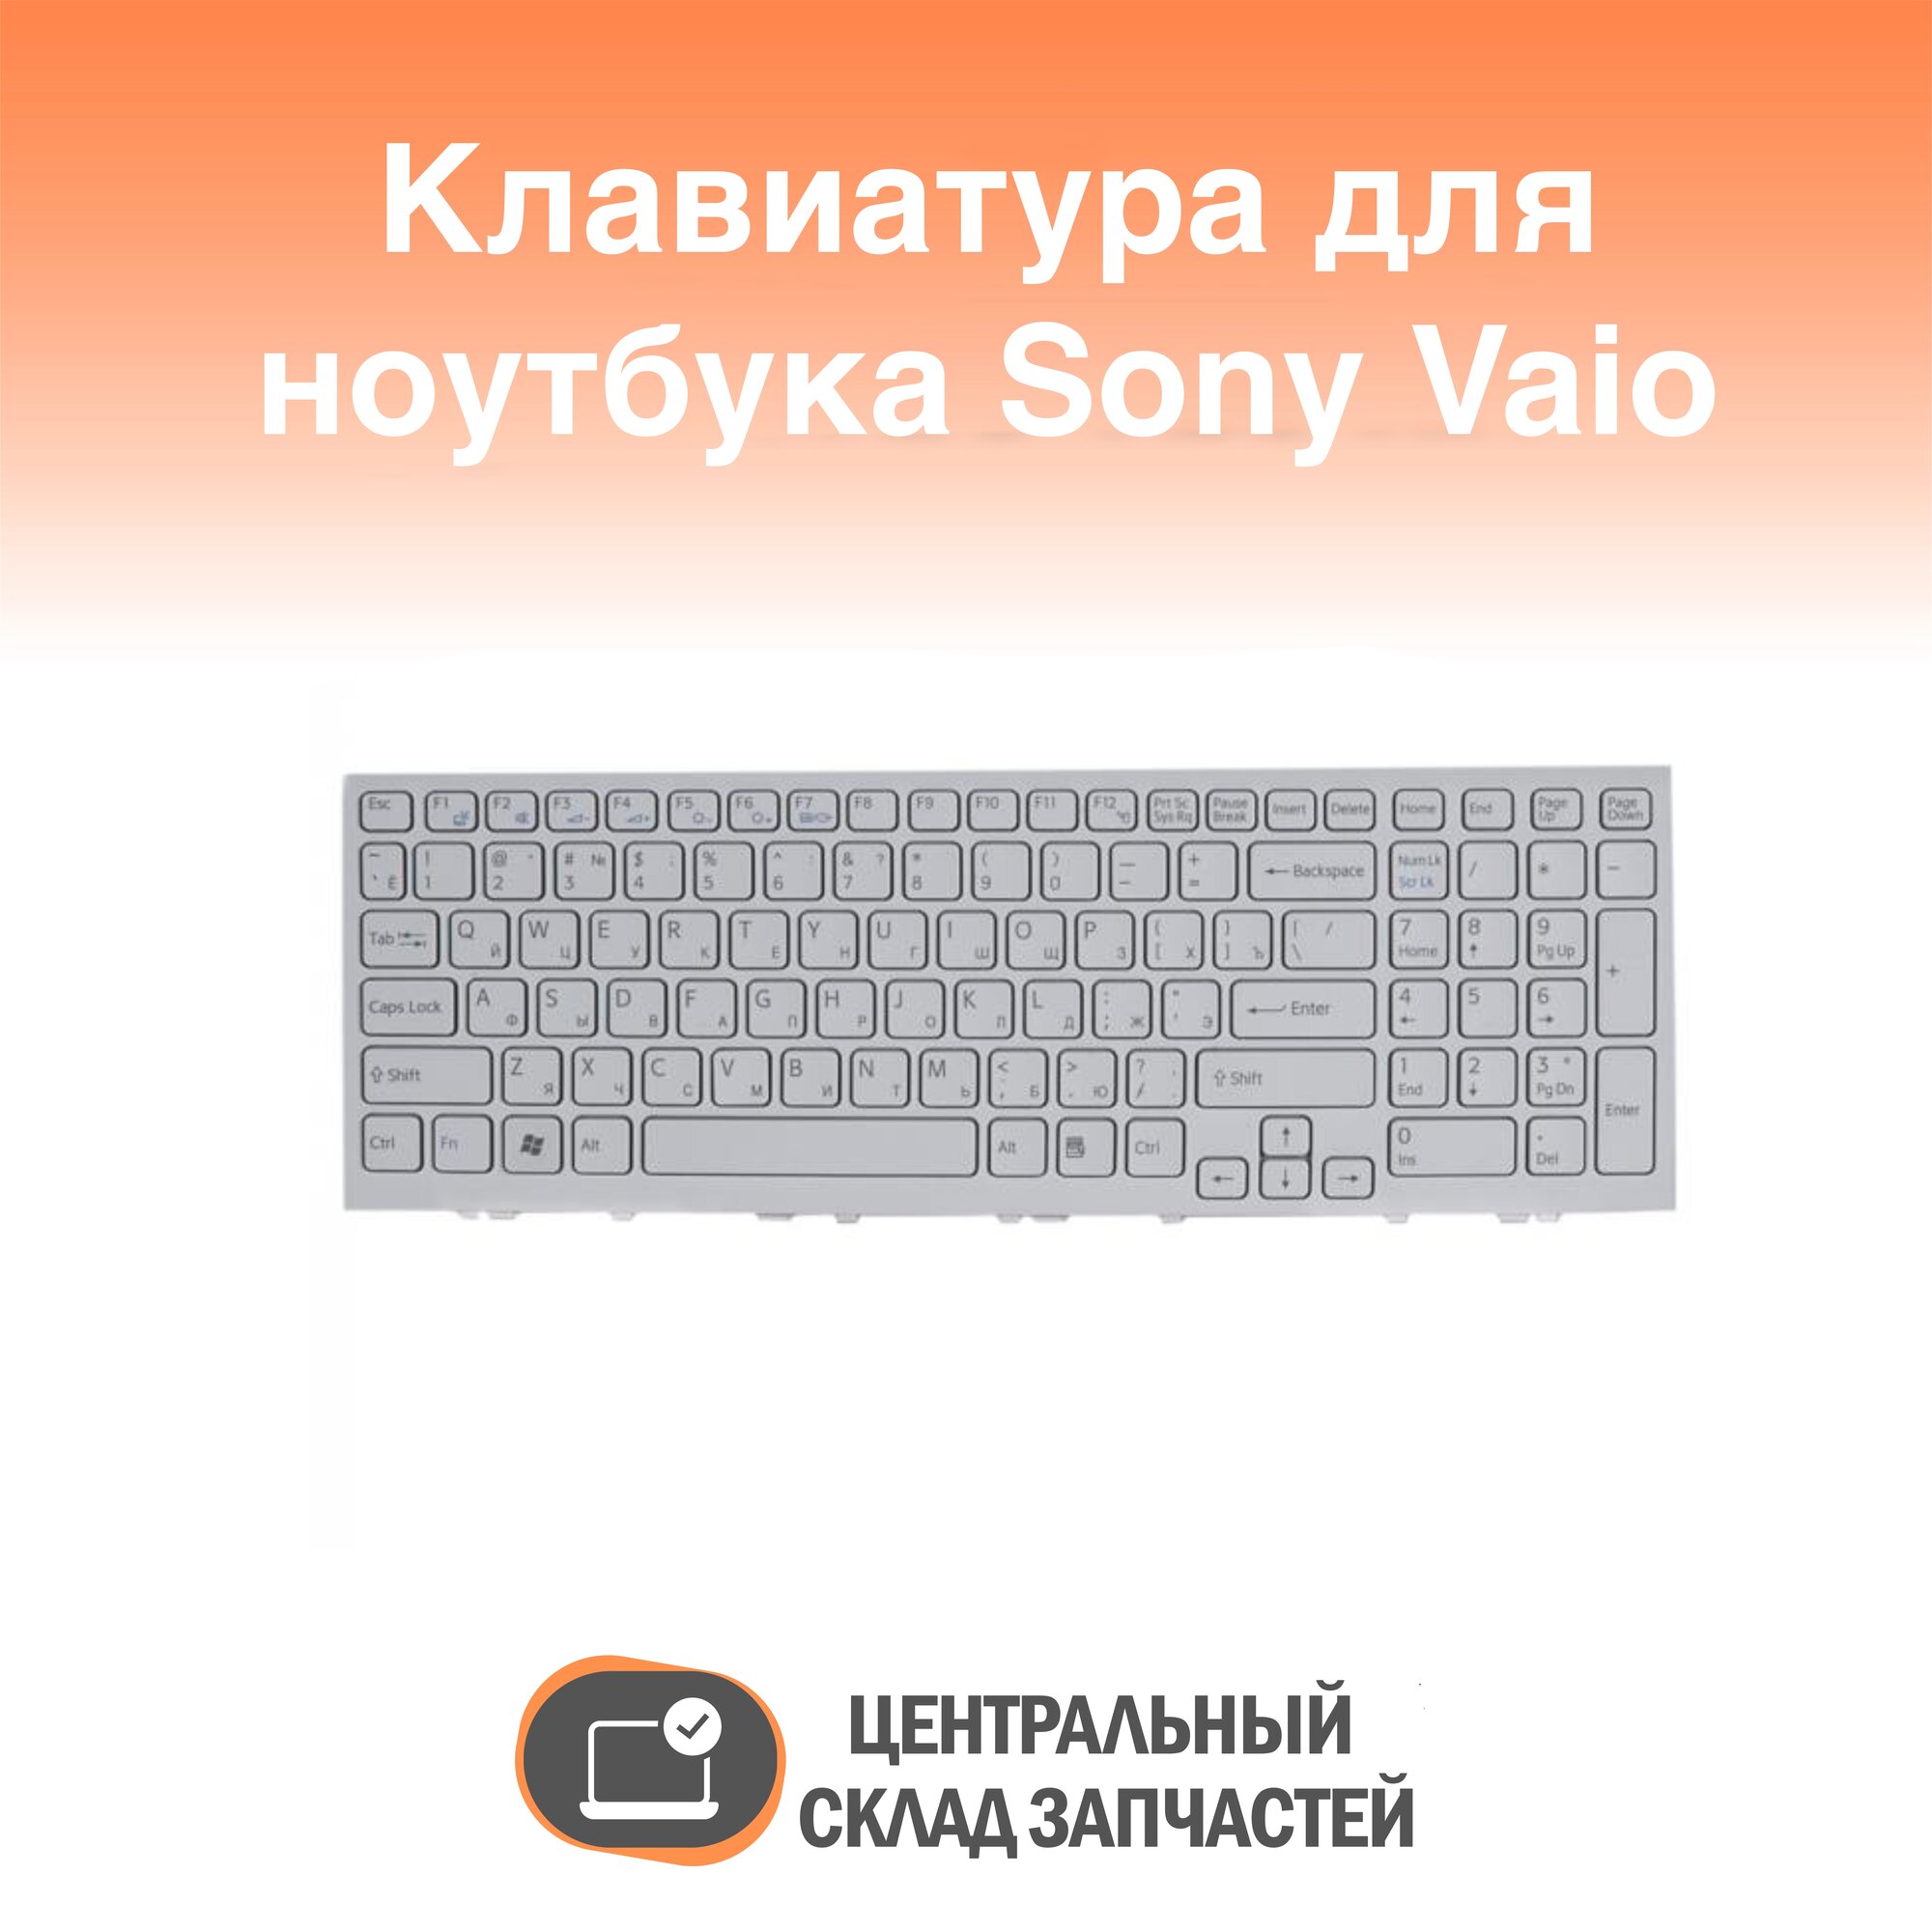 Keyboard / Клавиатура для ноутбука Sony Vaio белая с рамкой гор. Enter